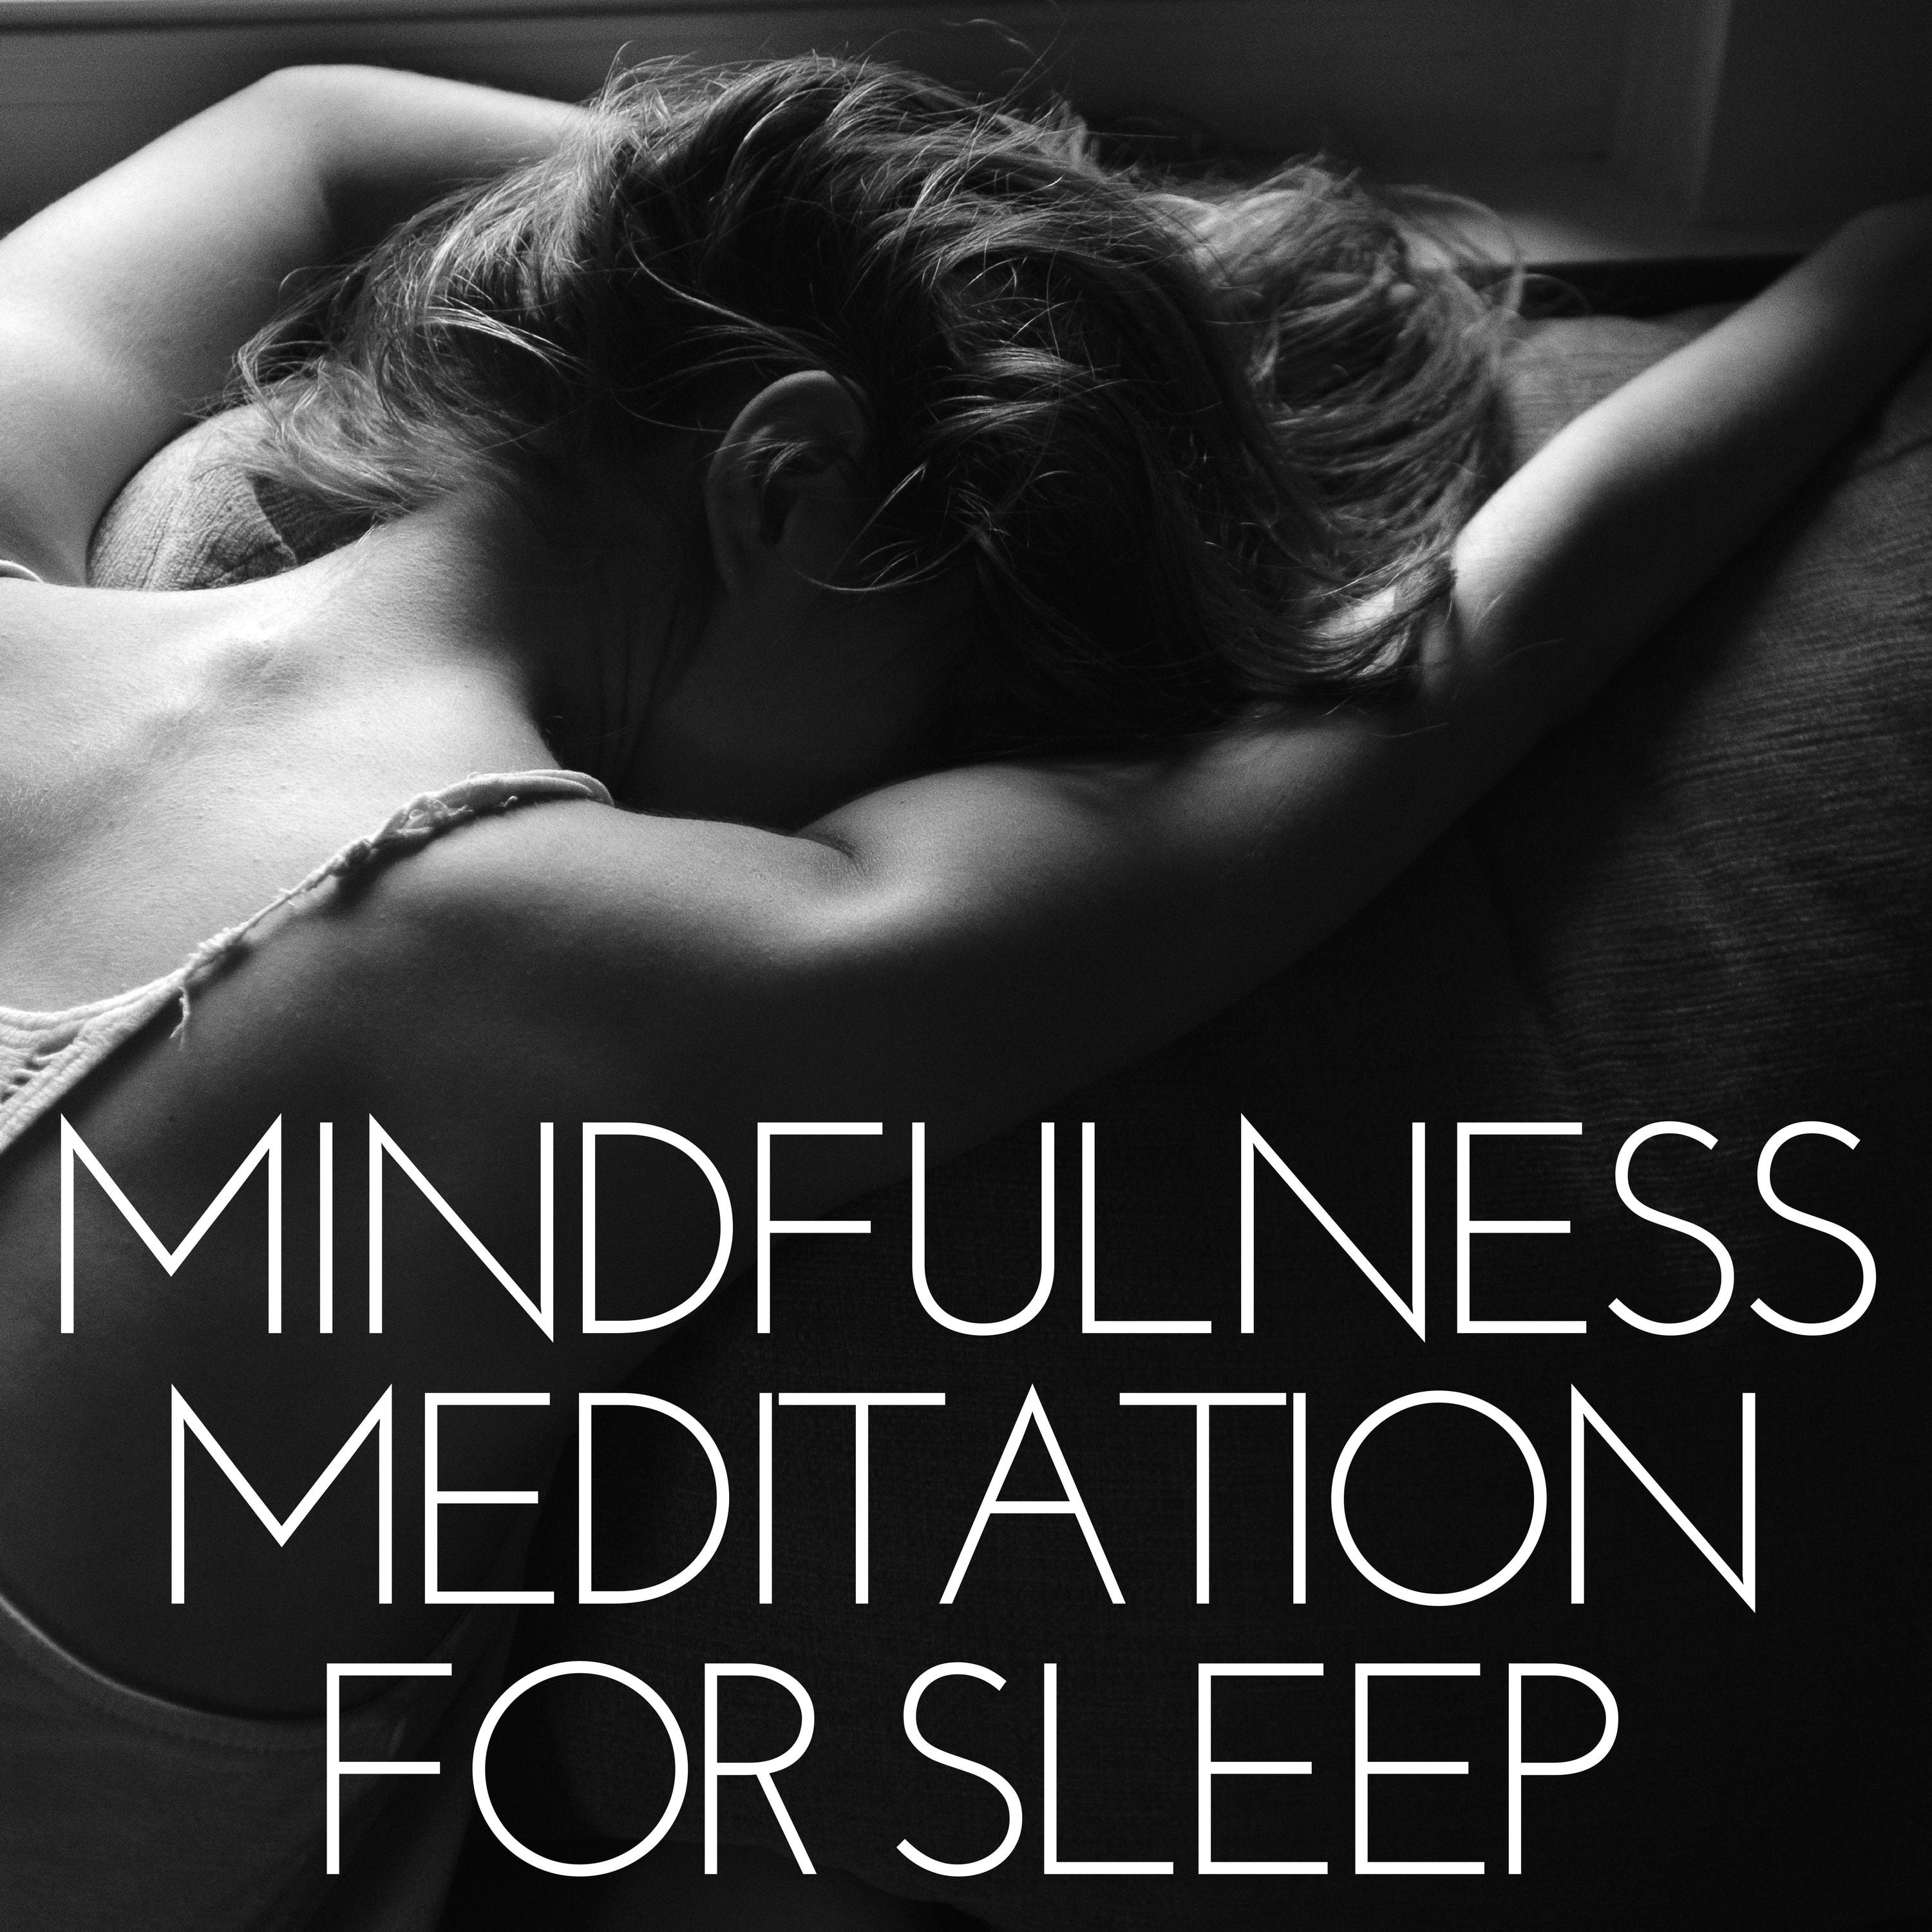 Mindfulness Meditation for Sleep